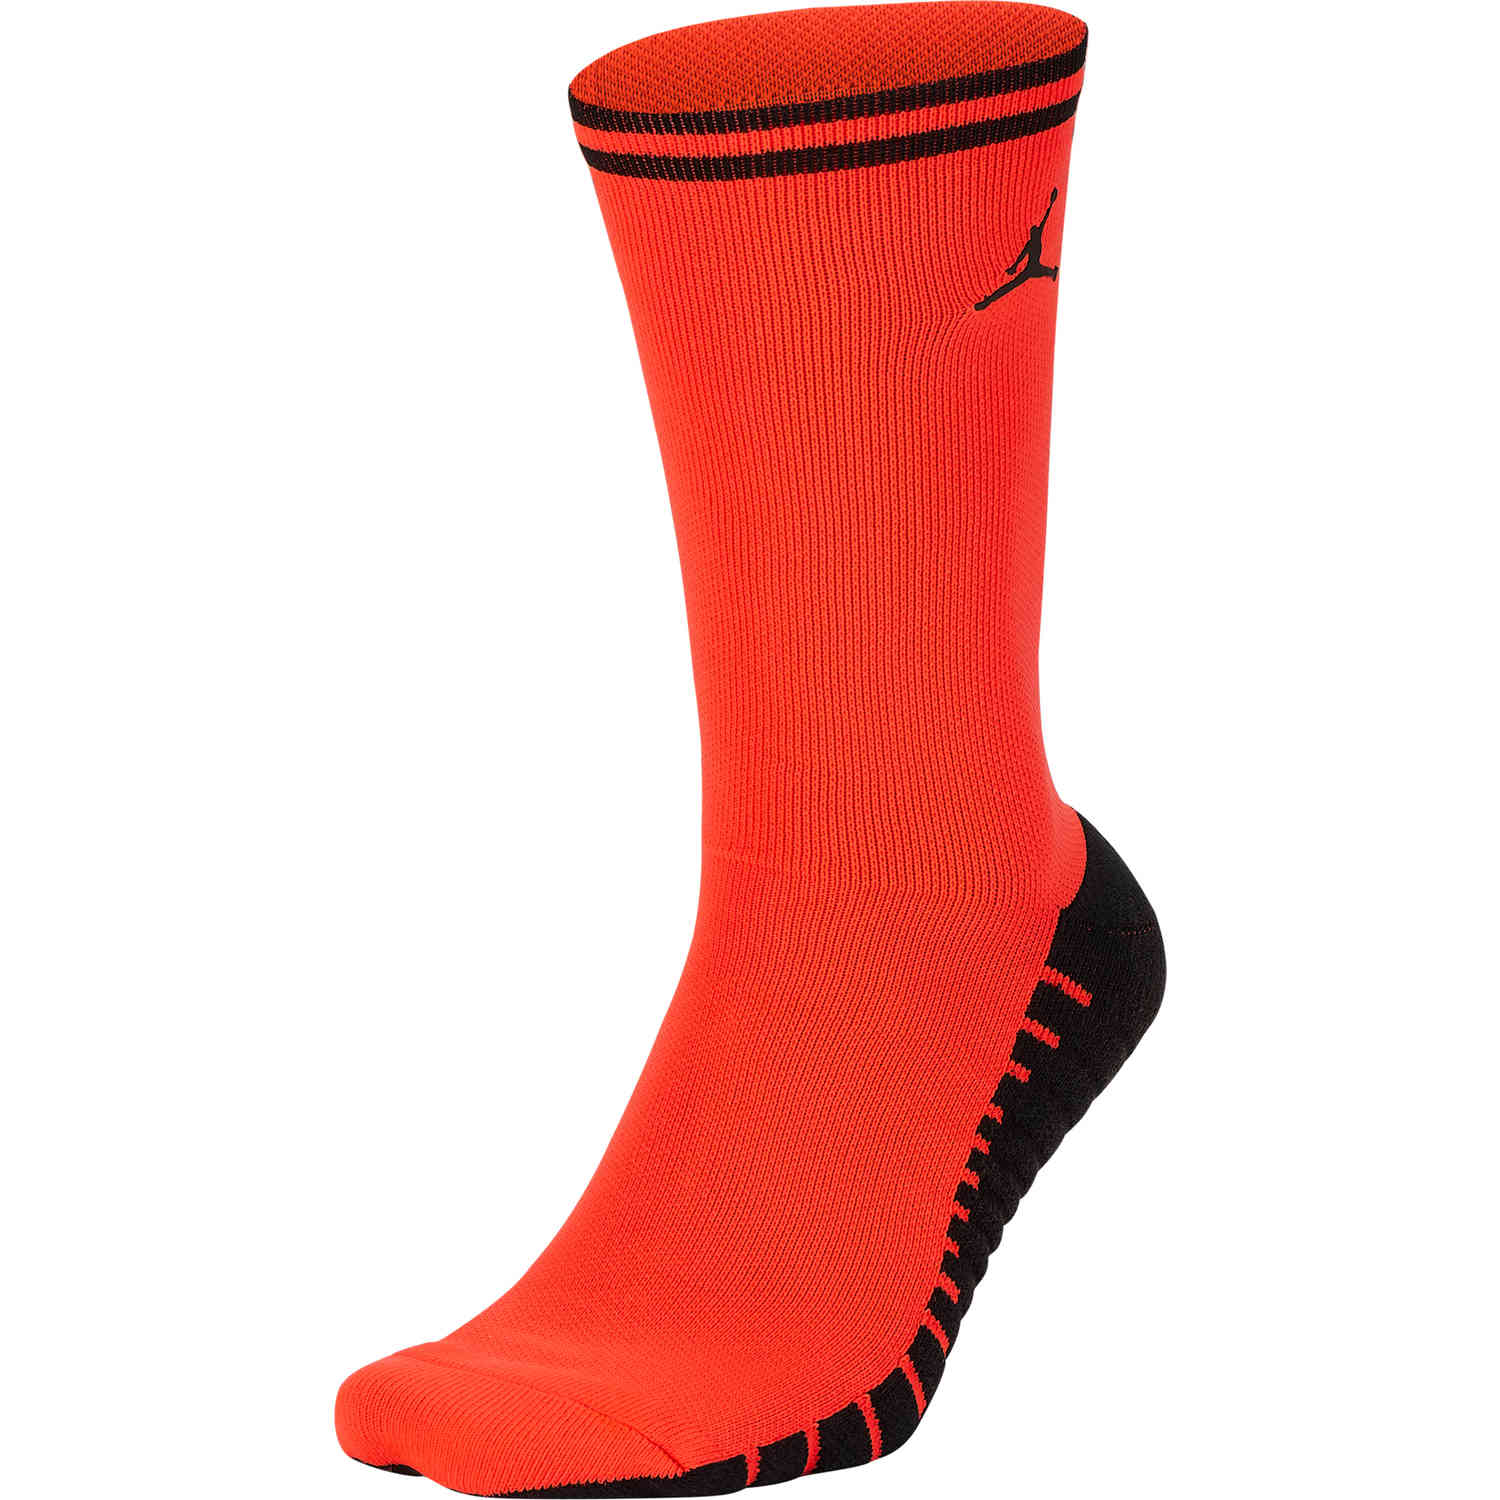 orange jordan socks